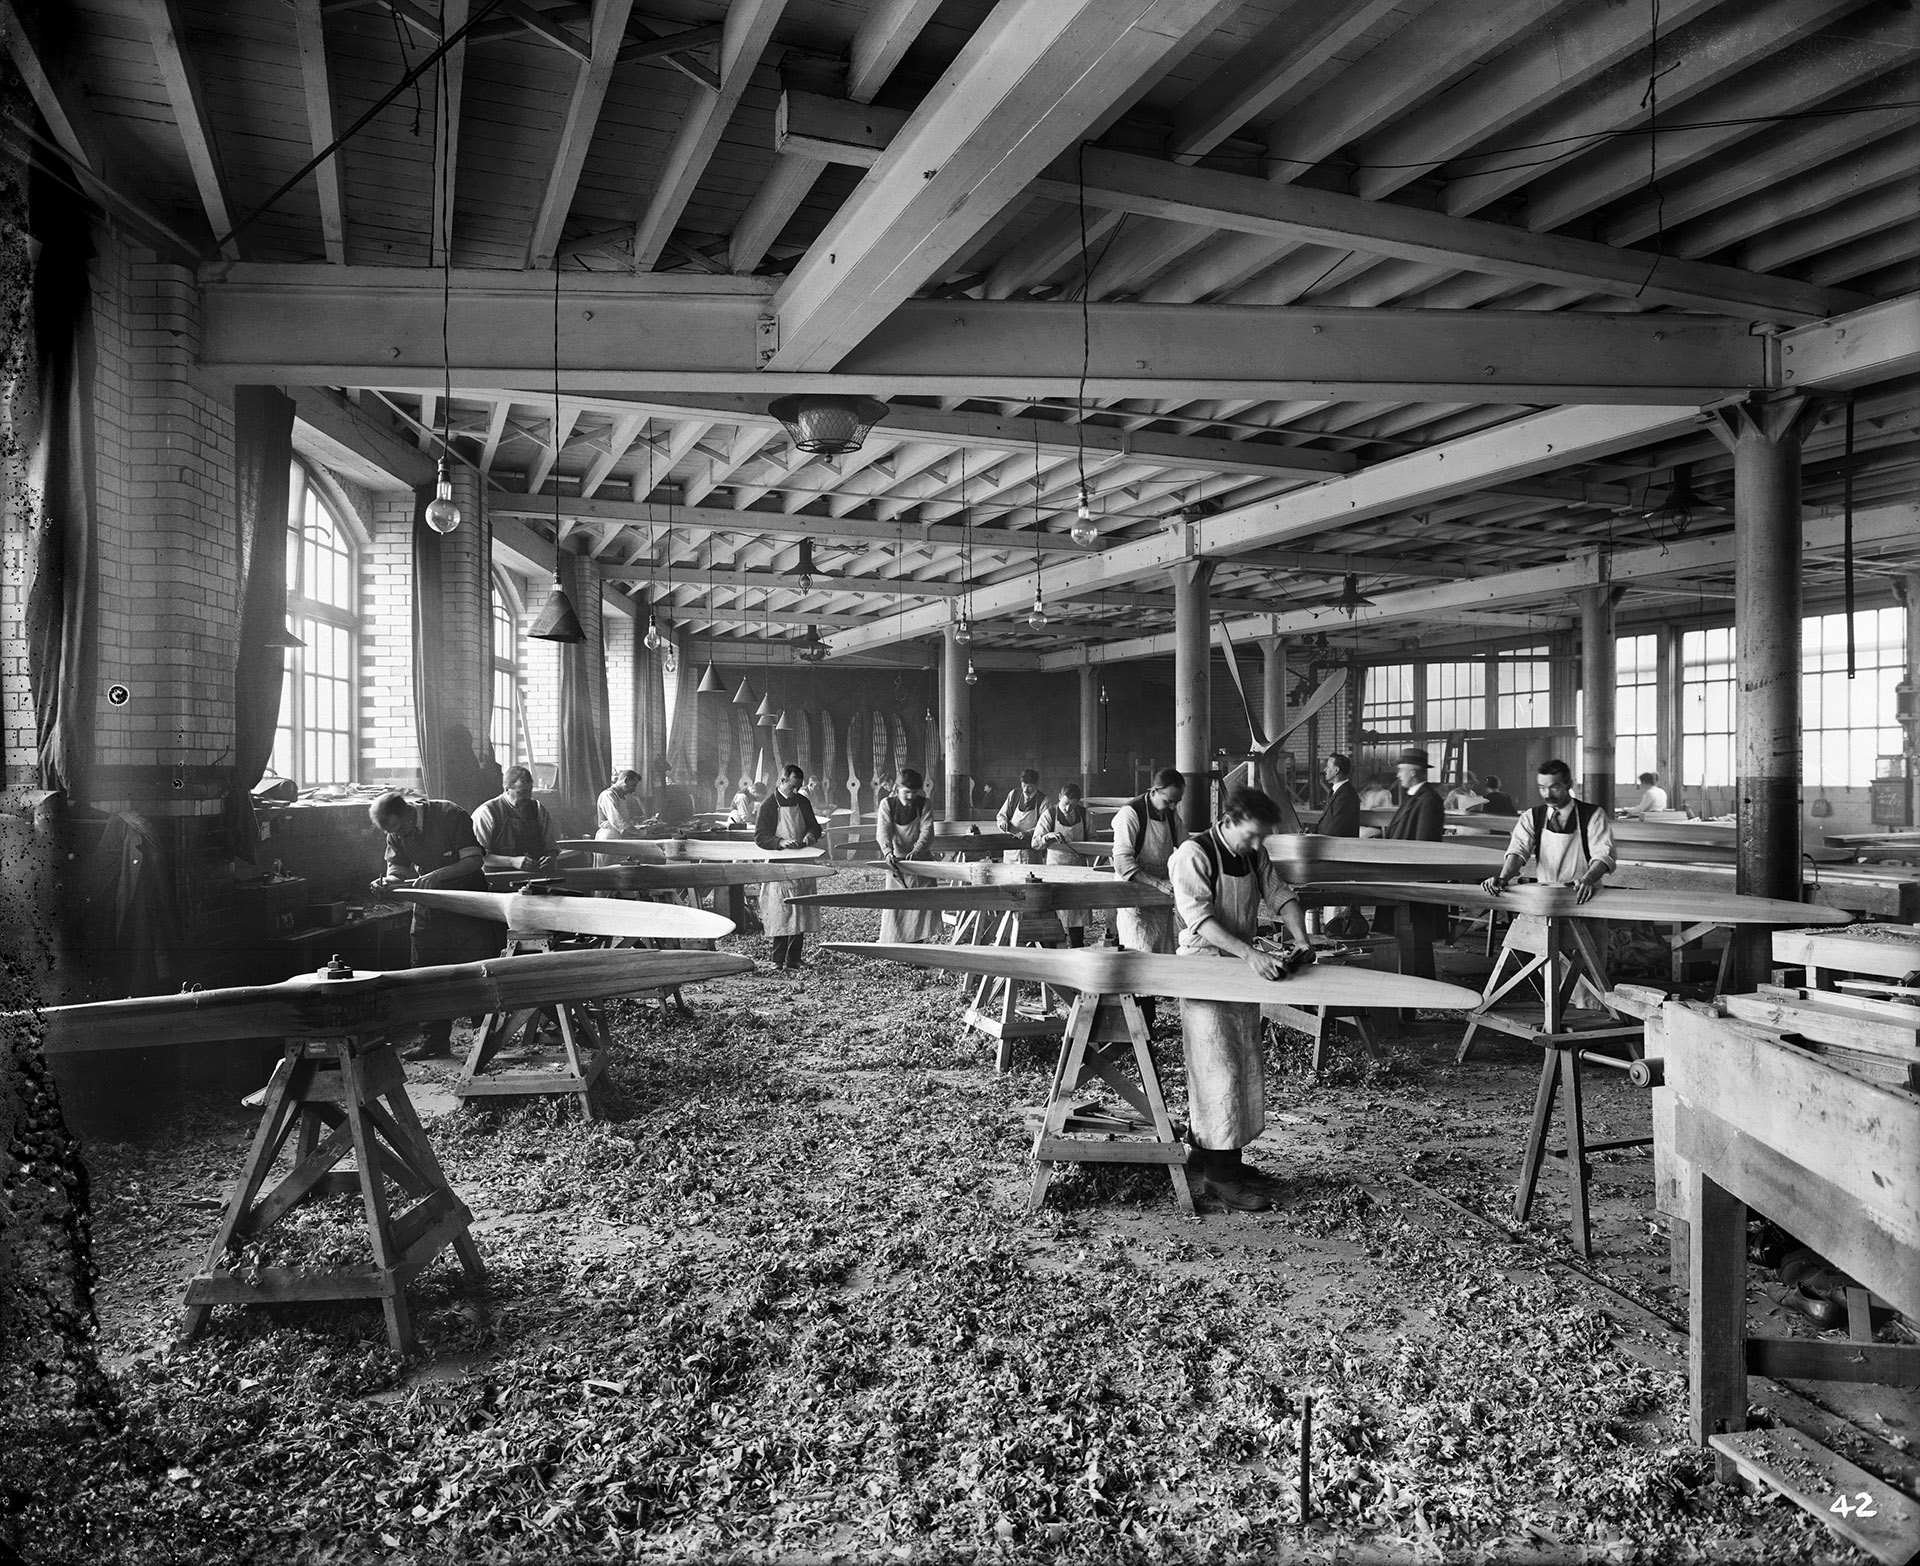 Hampton & Sons Ltd, Lambeth, London, in a wood working shop men carefully shape wooden aircraft propellers